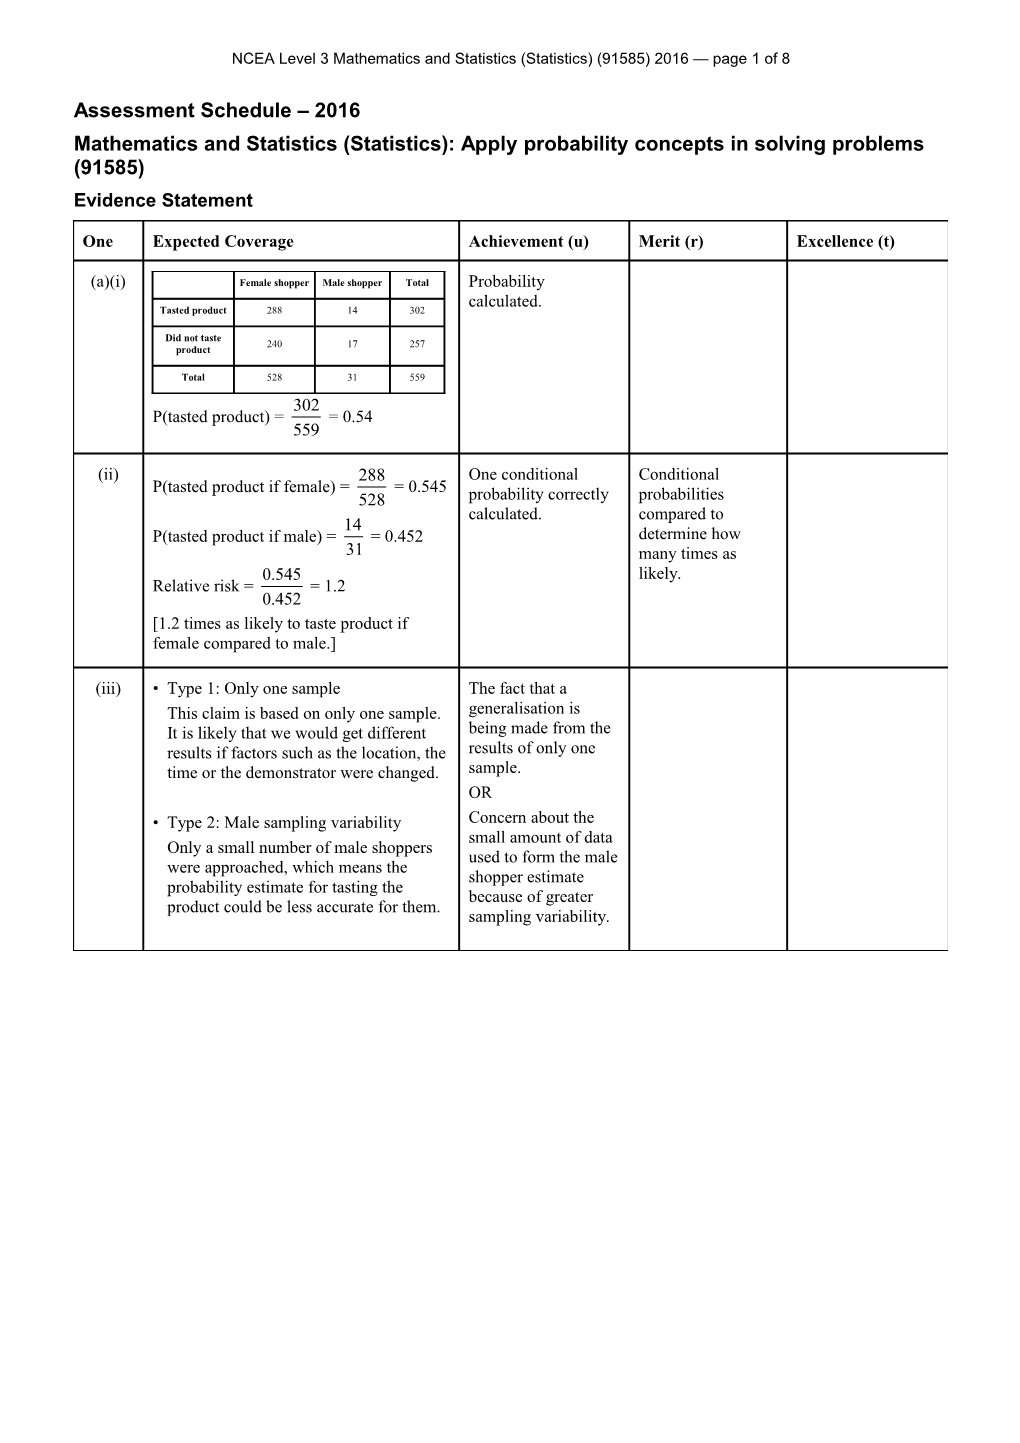 NCEA Level 3 Mathematics and Statistics (Statistics) (9158Assessment Schedule